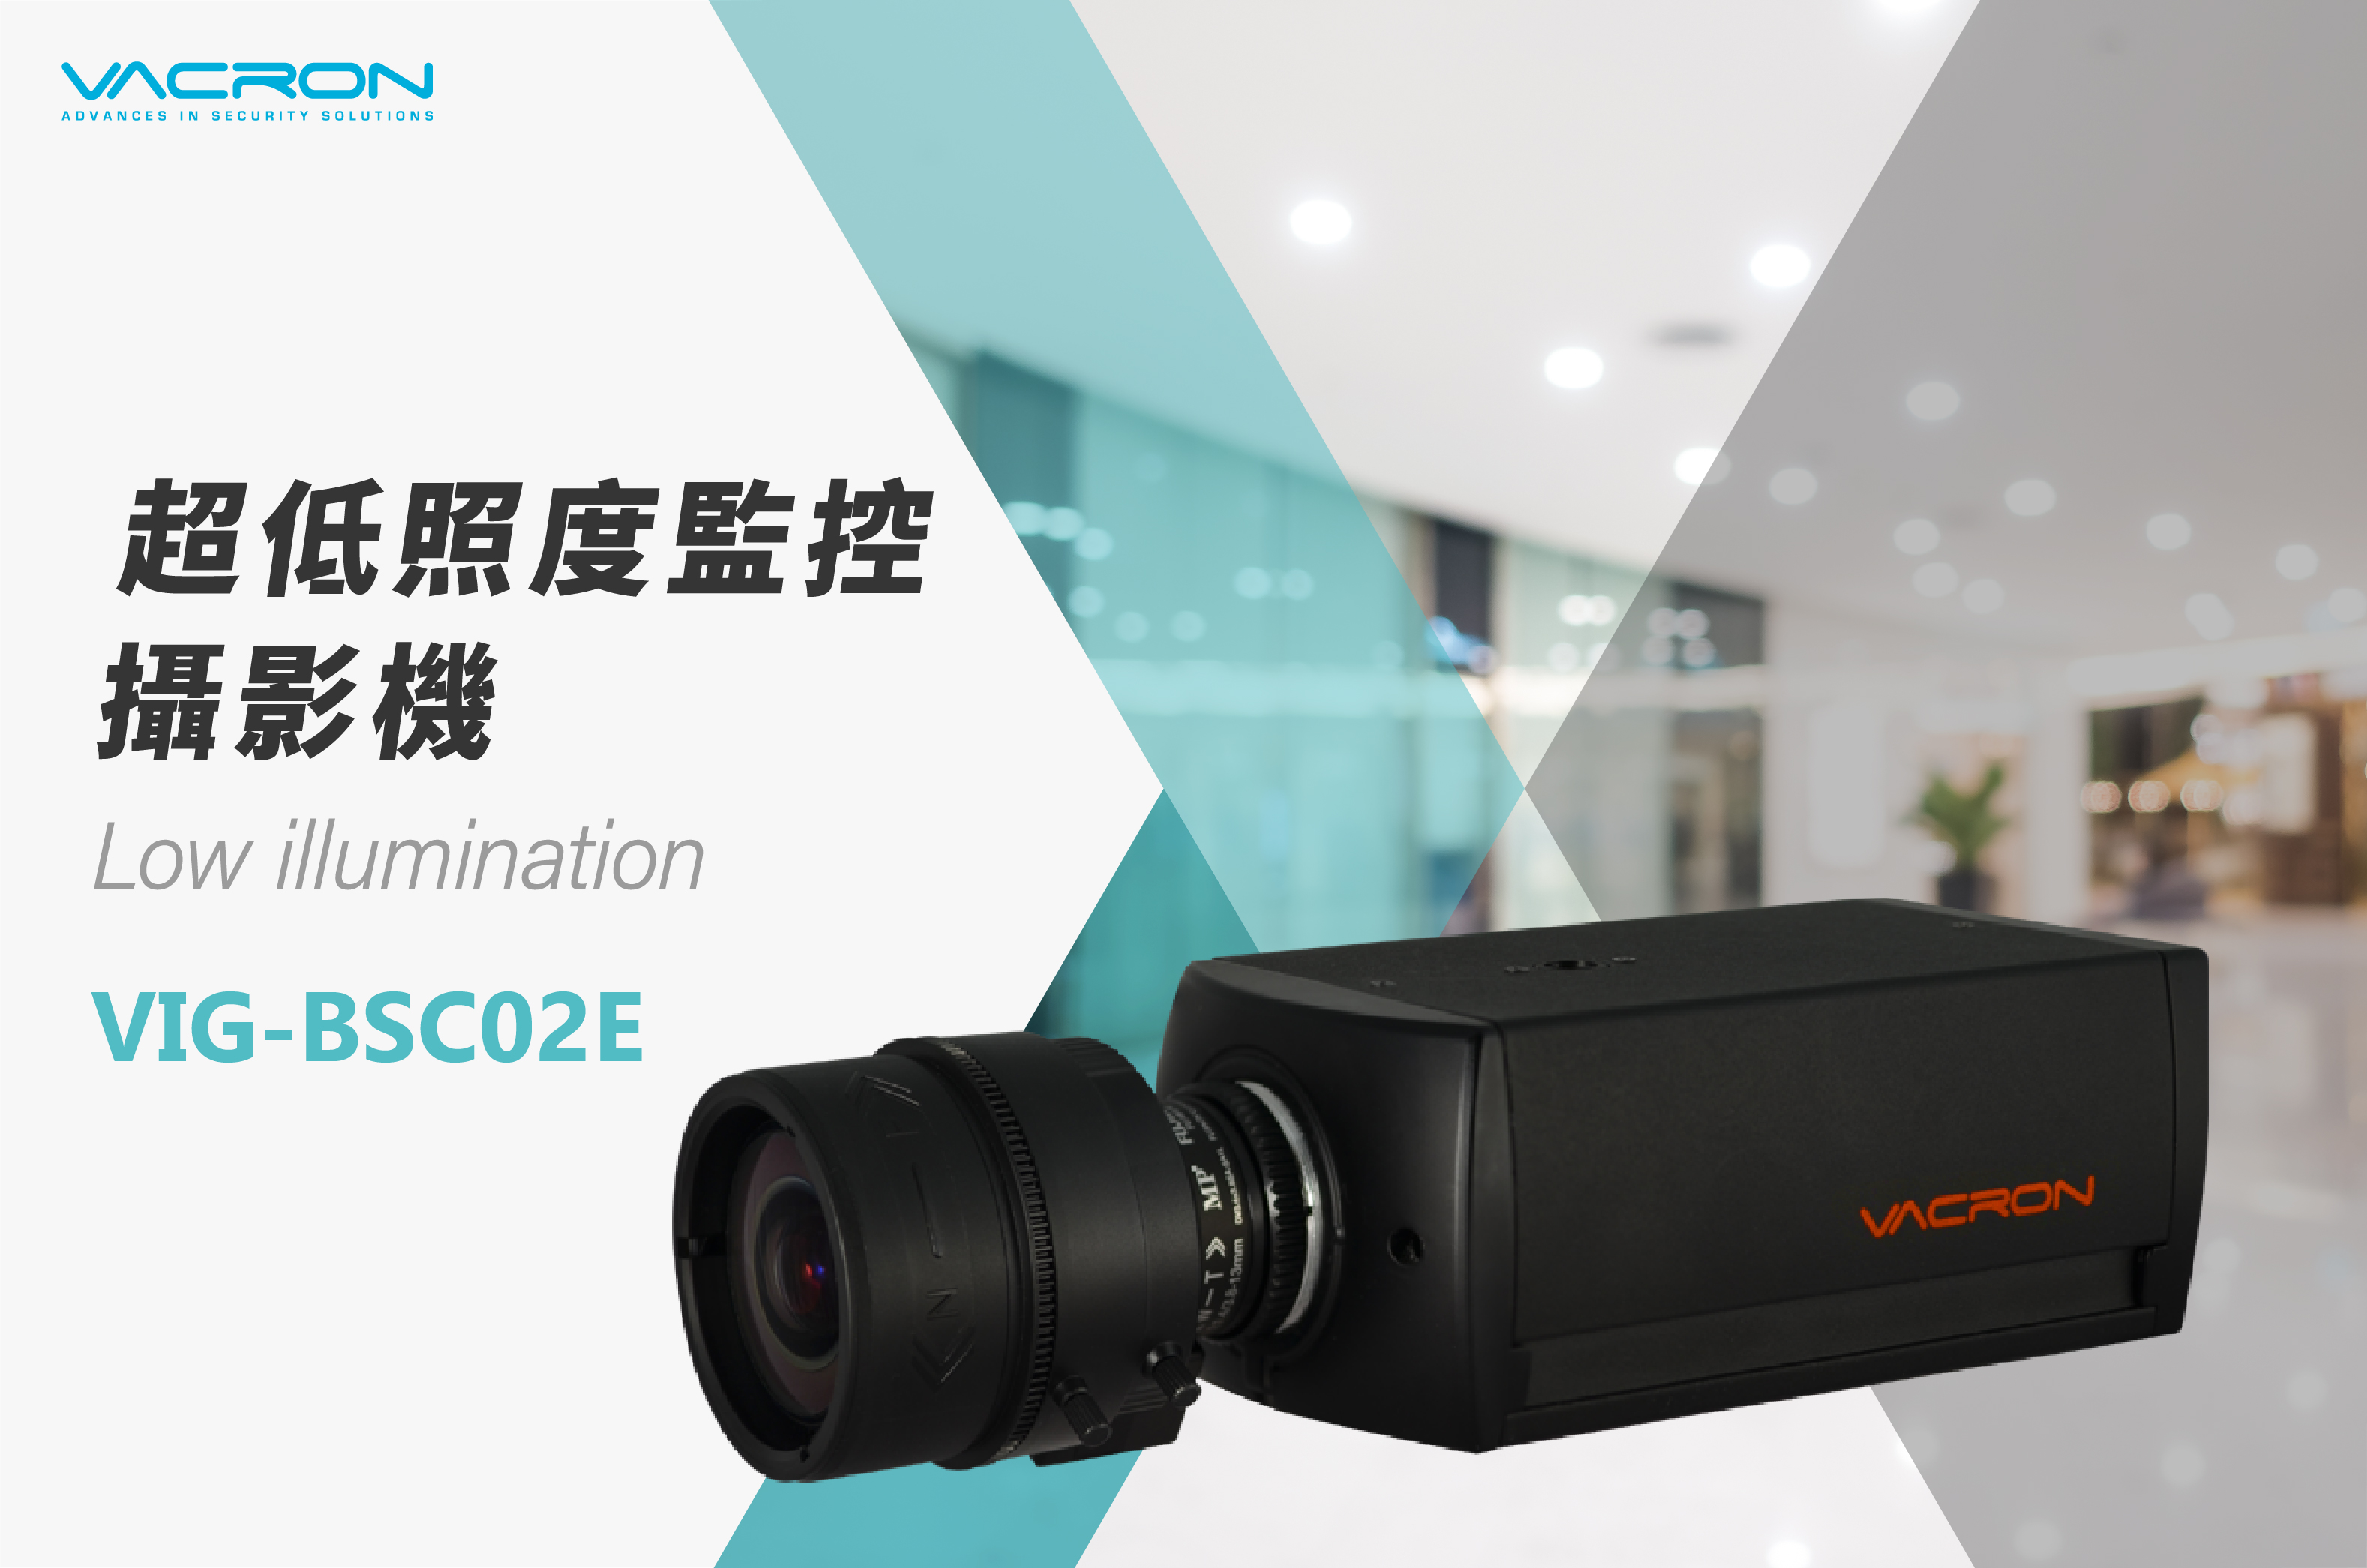 Vacron 超低照度網路監控攝影機